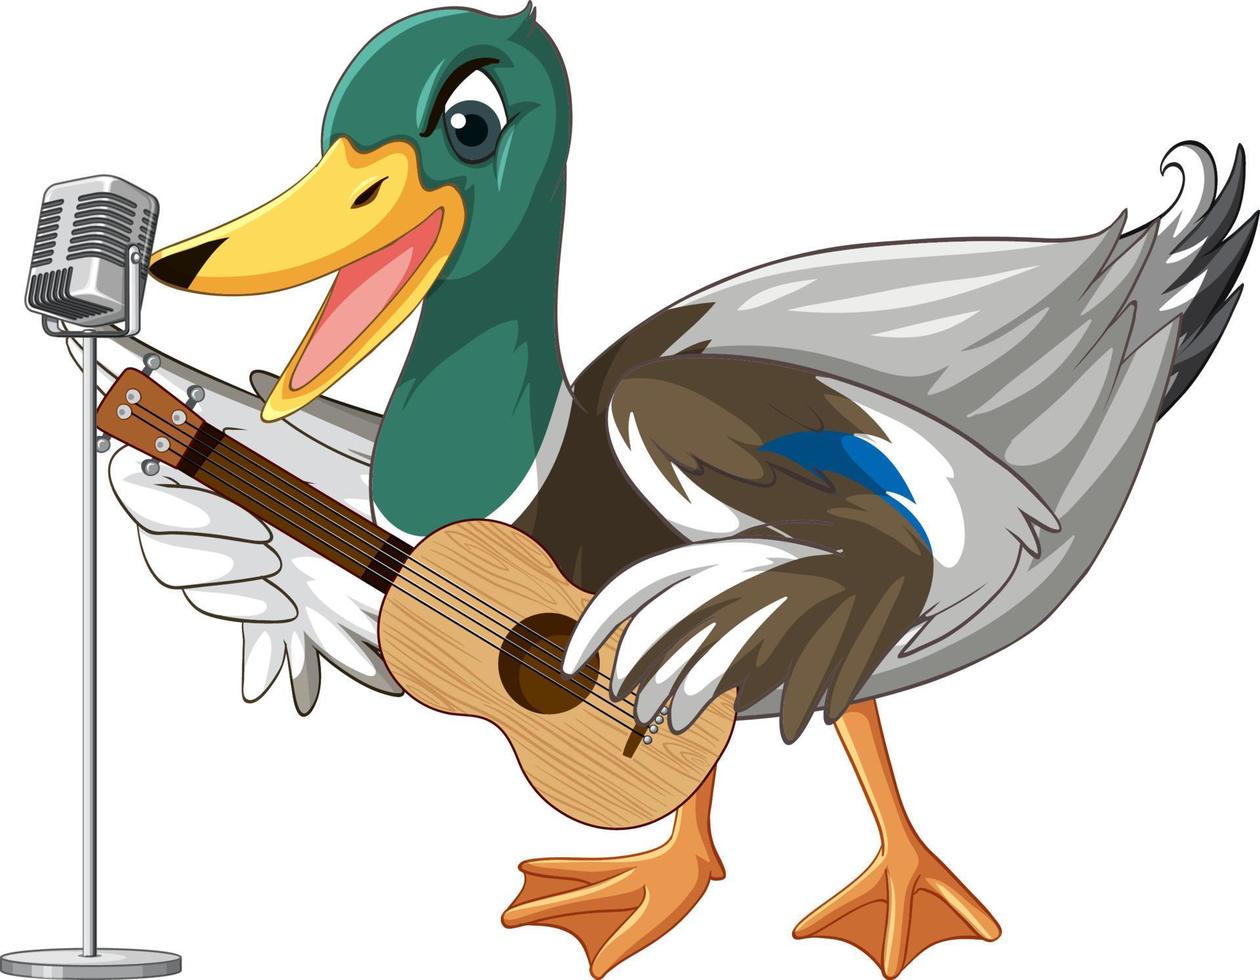 Duck with green head cartoon character vector